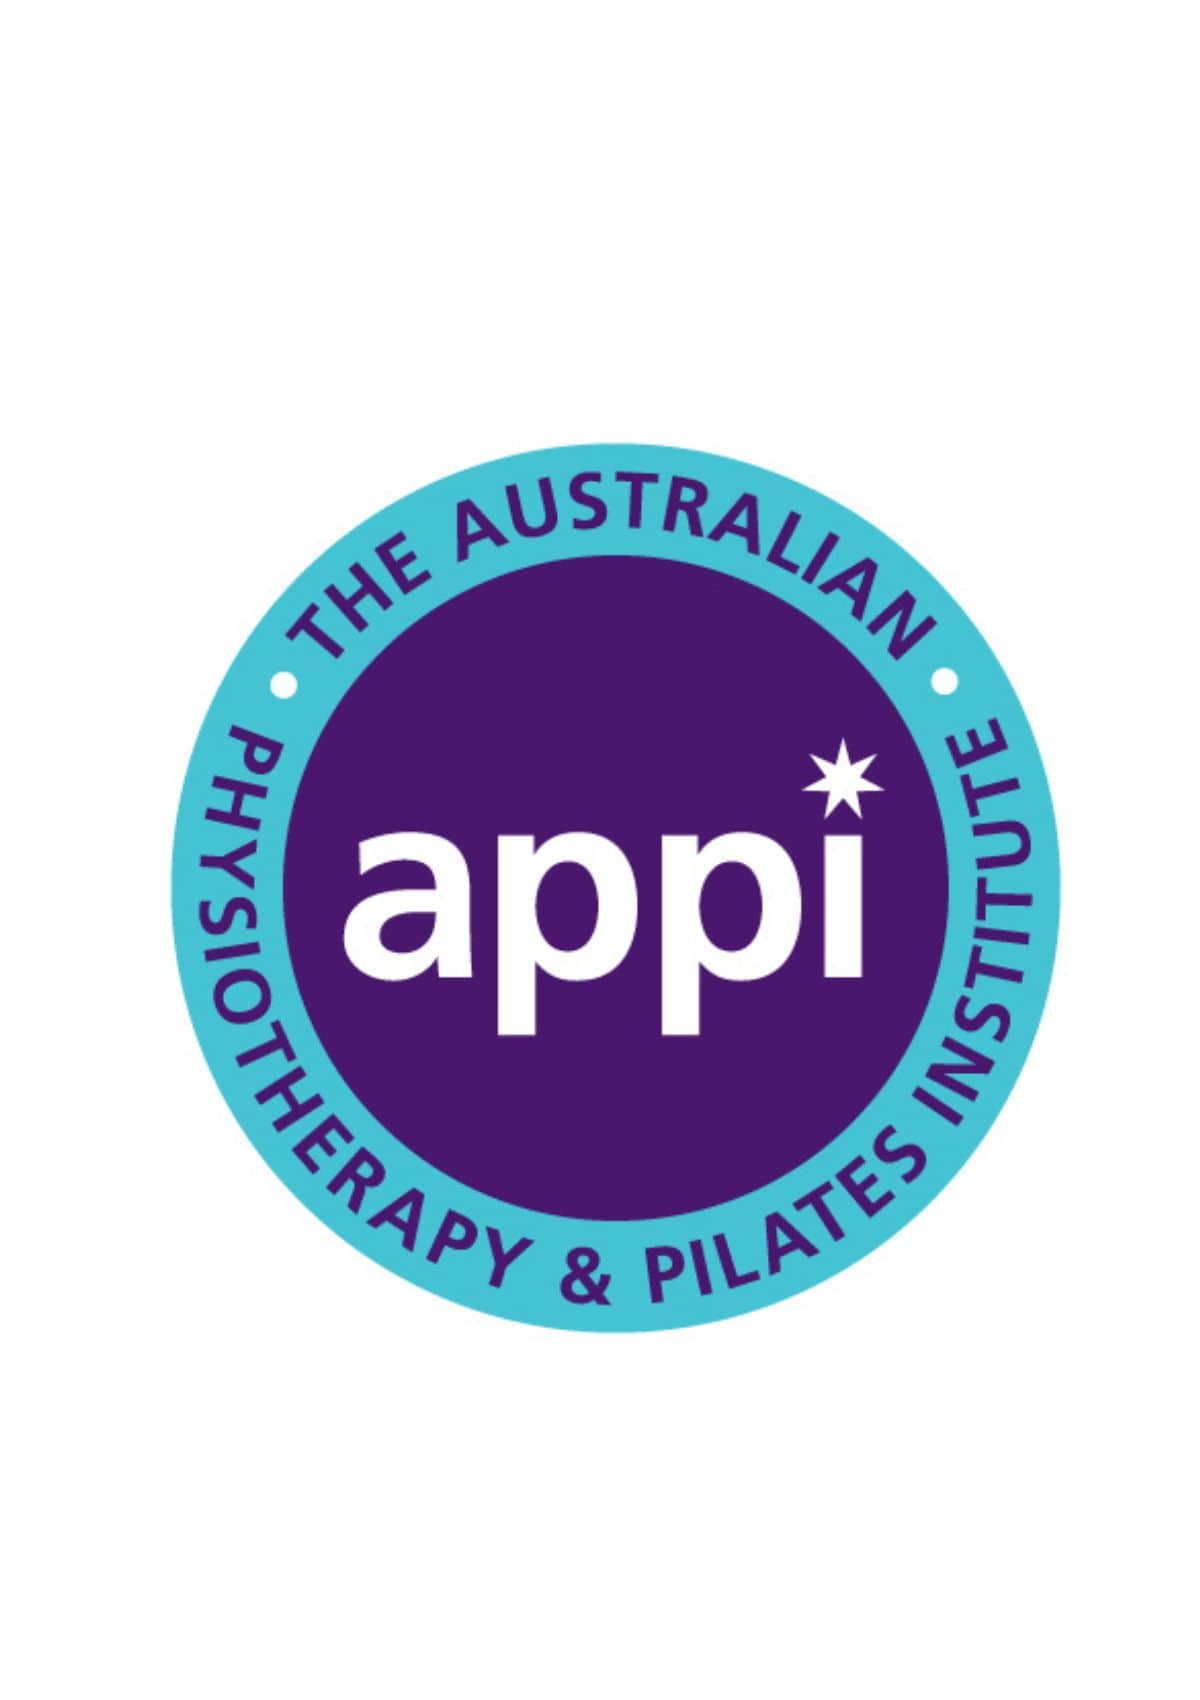 Australian physiotherapy & pilates institute logo